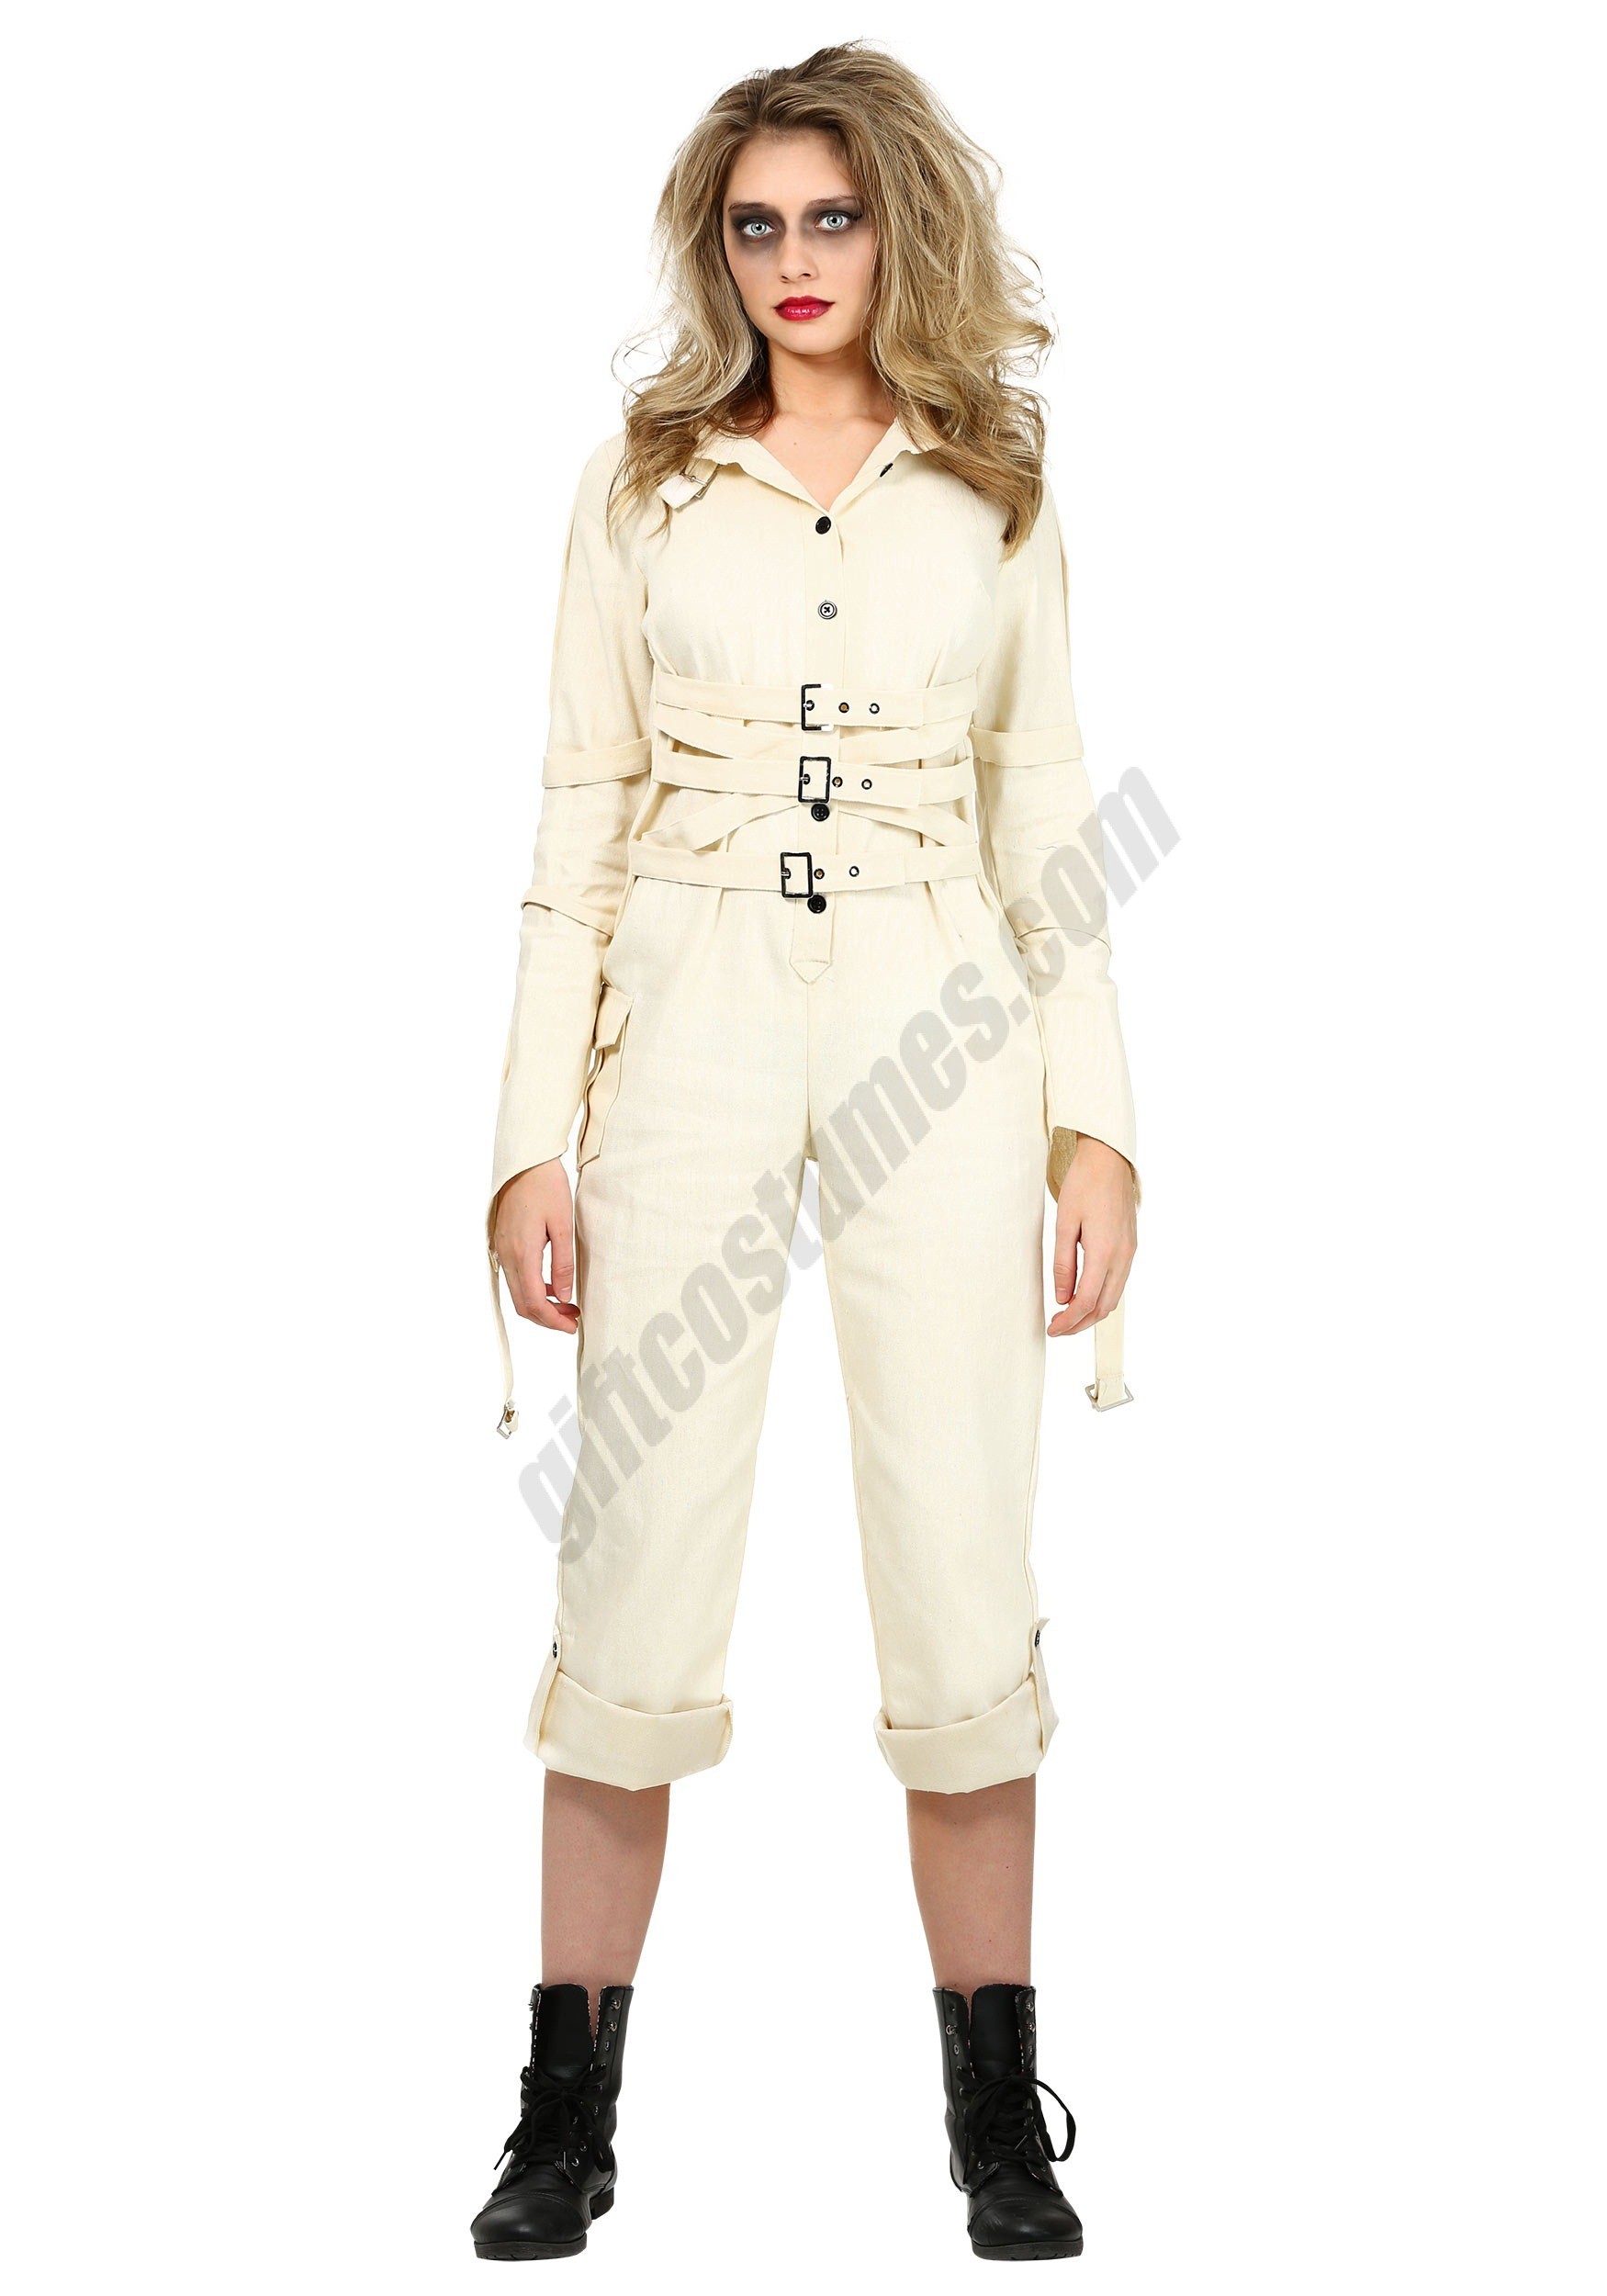 Women's Insane Asylum Straitjacket Costume - Women's Insane Asylum Straitjacket Costume